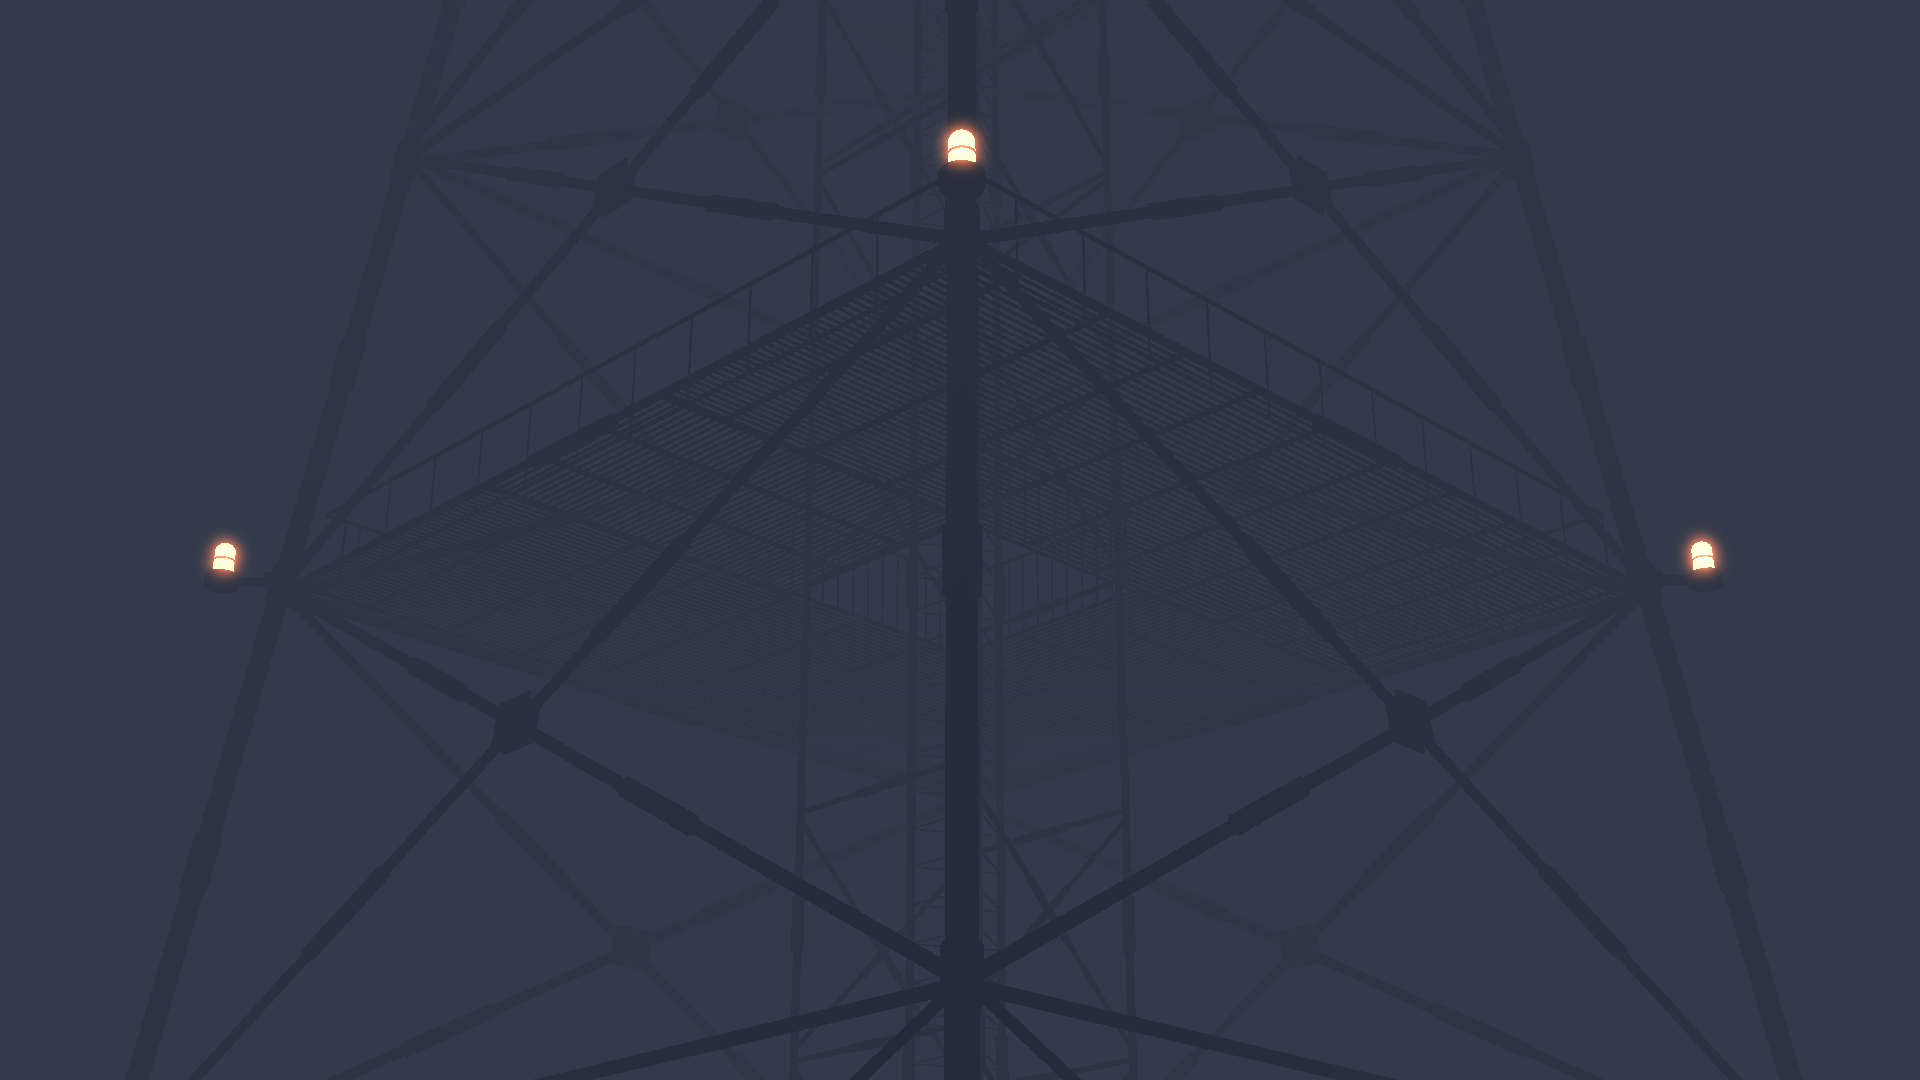 General 1920x1080 tower minimalism simple background